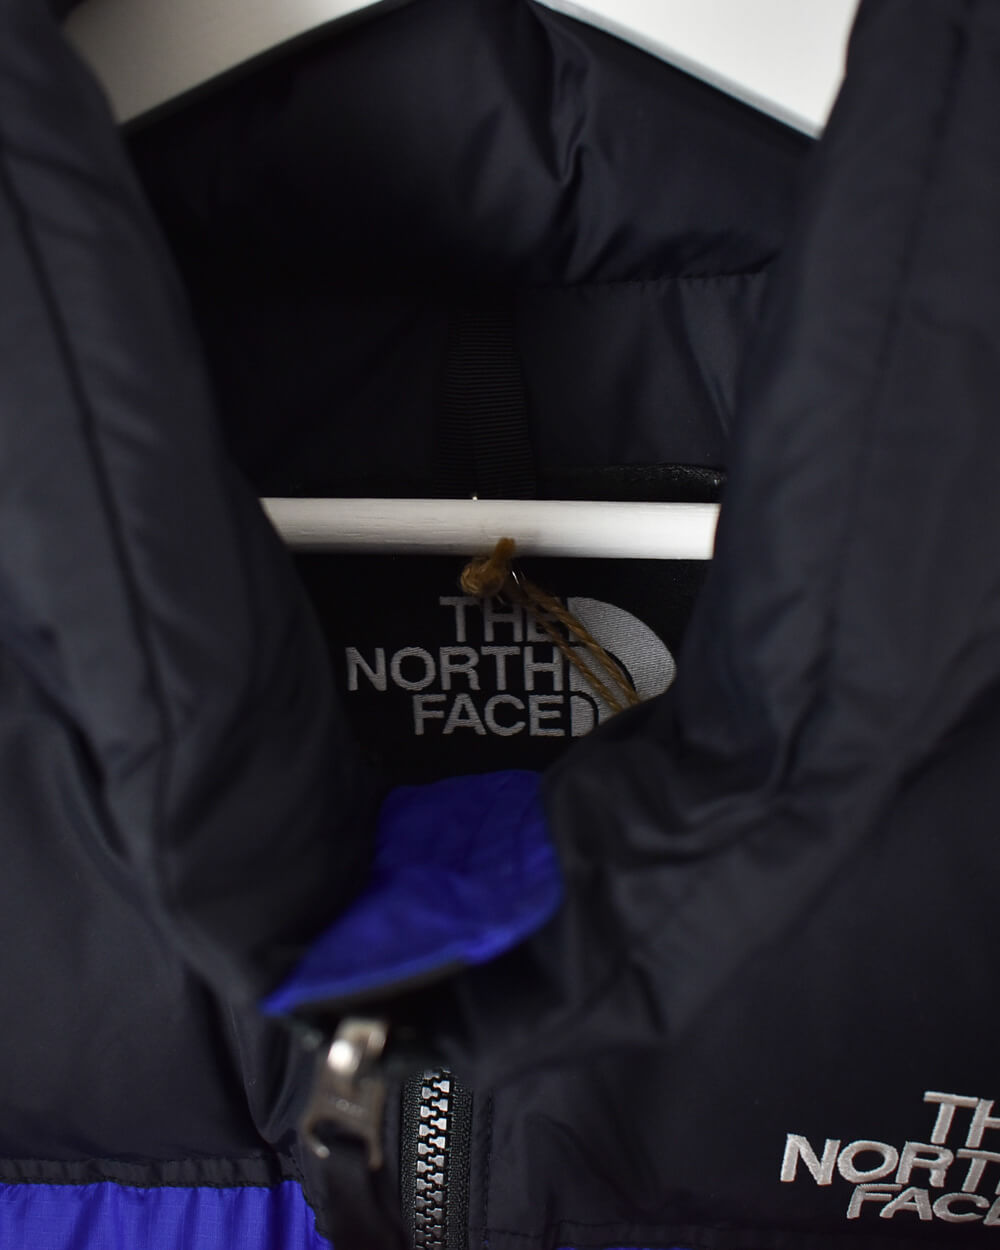 Black The North Face 700 Puffer Jacket - Medium